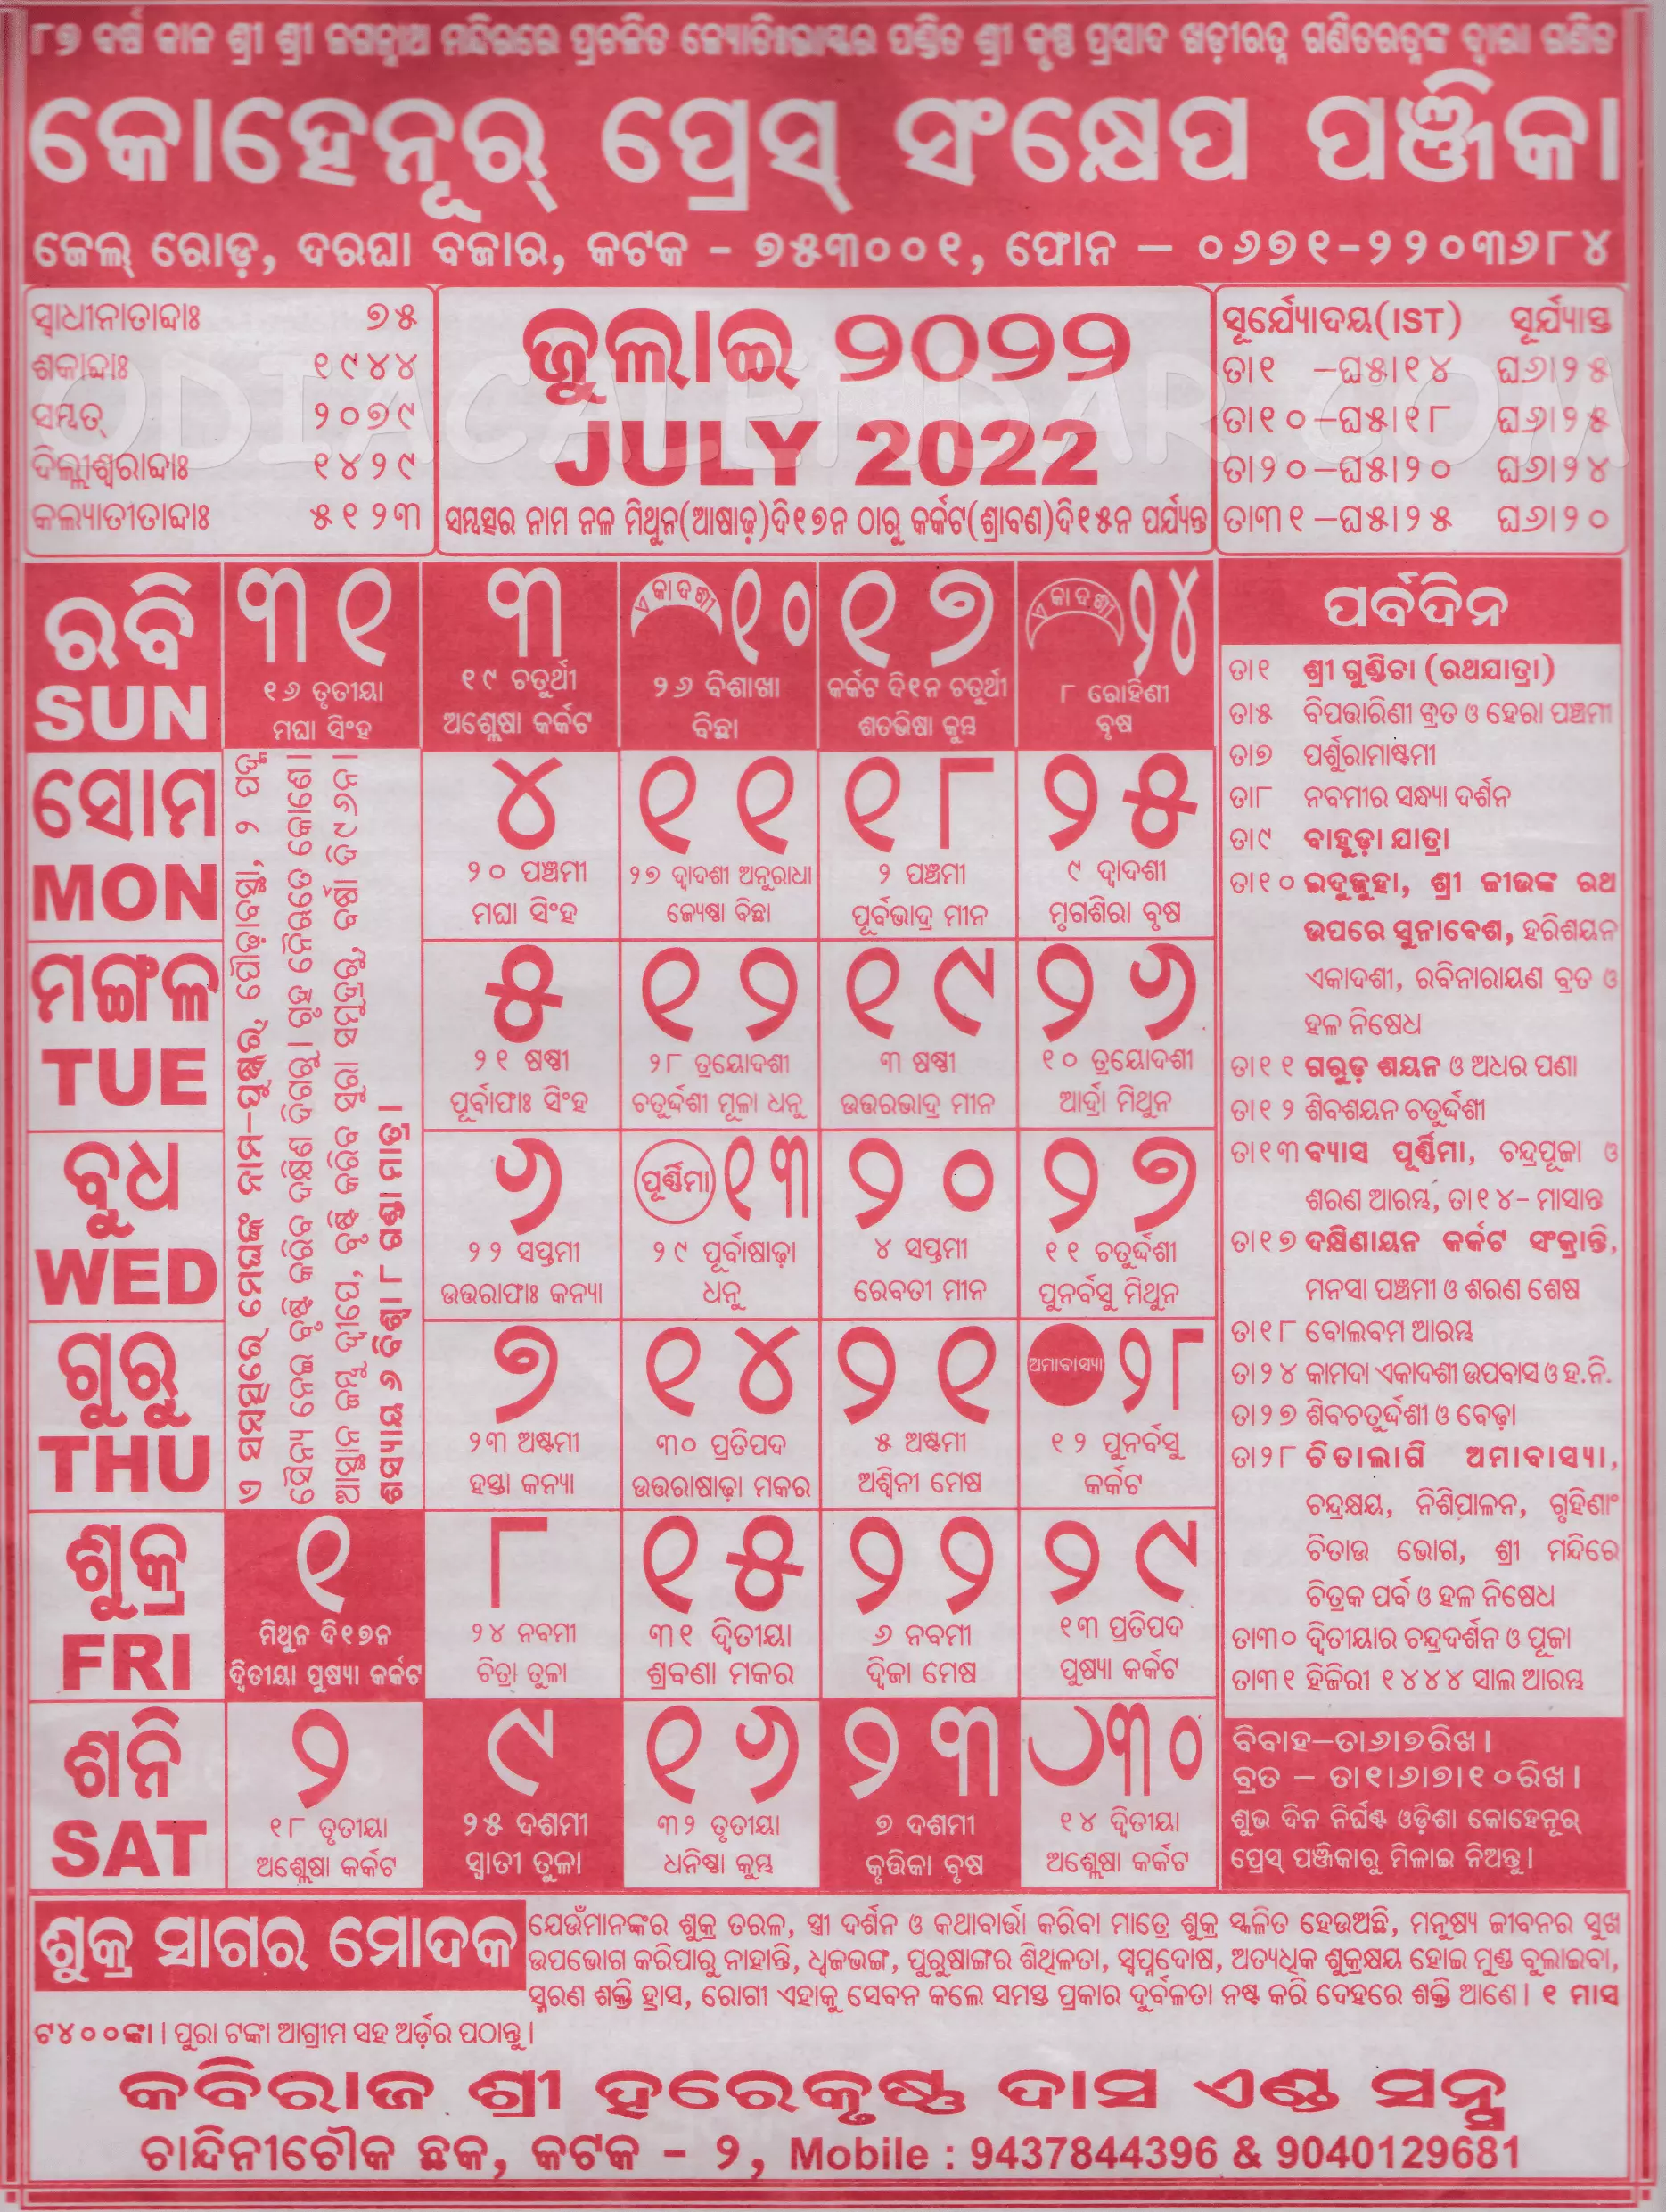 Odia Calendar 2022 Kohinoor Odia Calendar July 2022 - Download Hd Quality